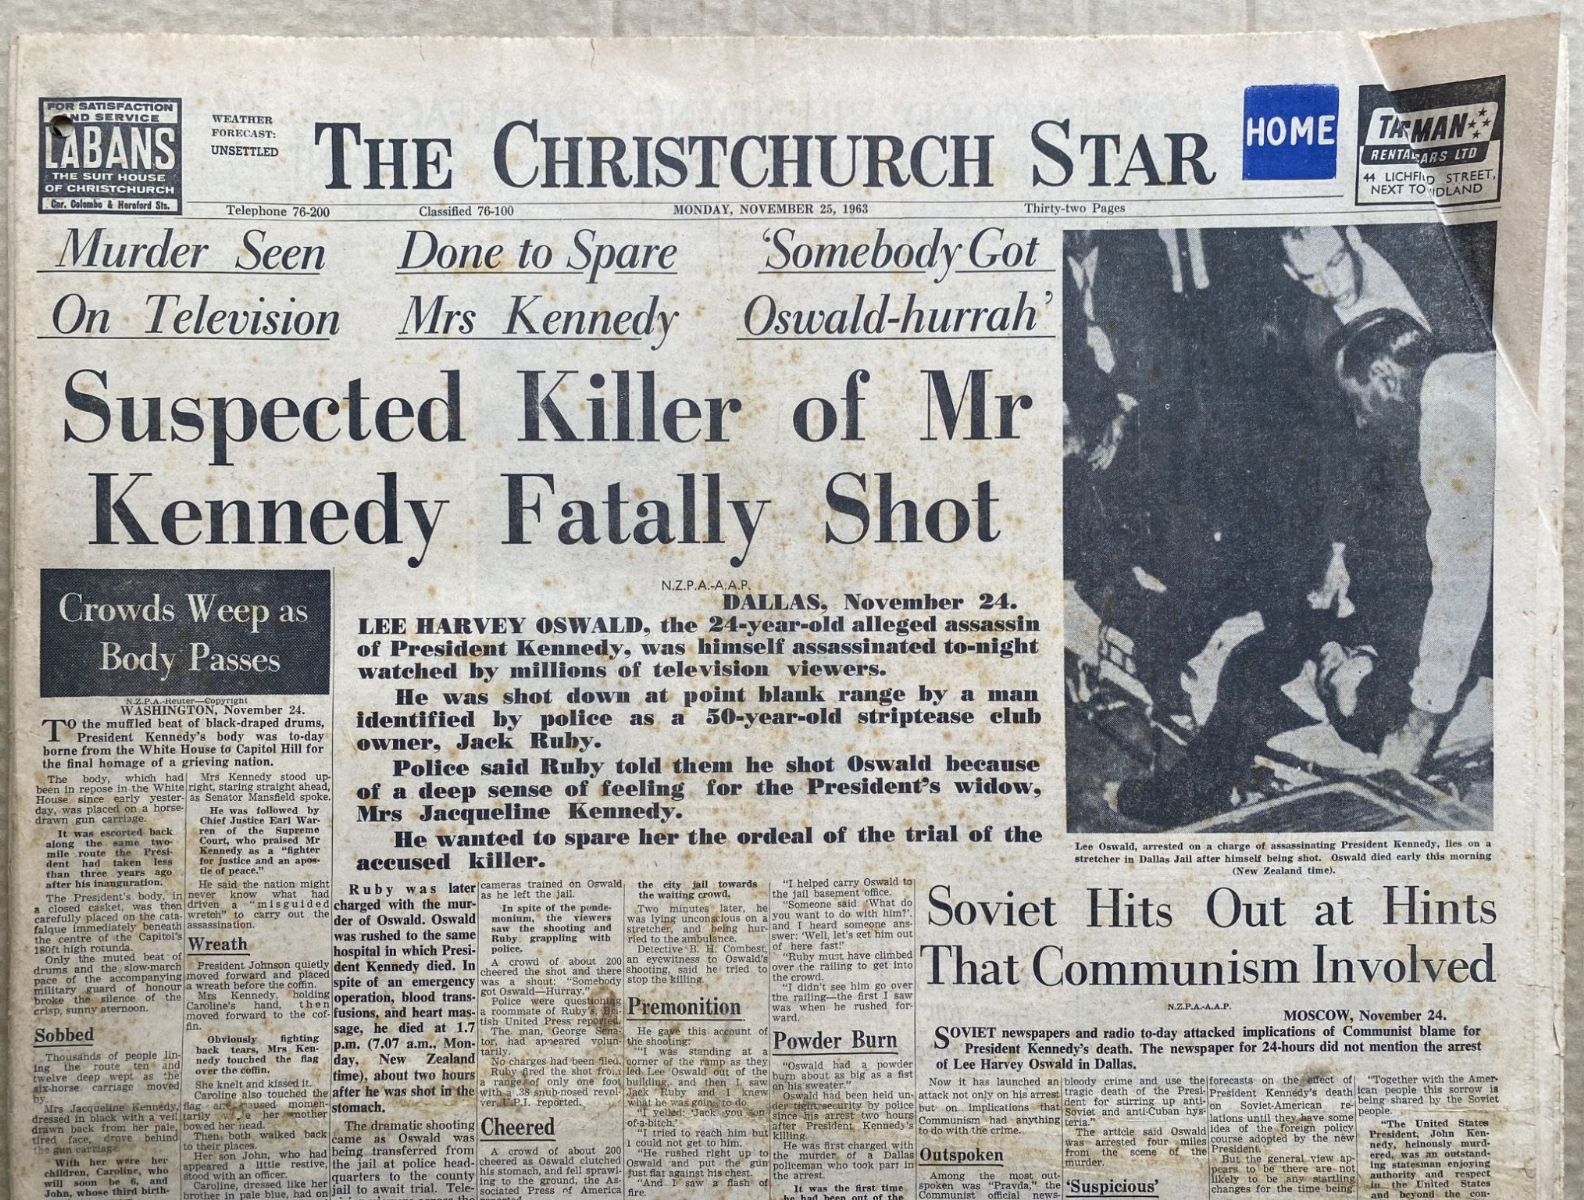 OLD NEWSPAPER: The Christchurch Star, 25 November 1963 - JFK Assassination